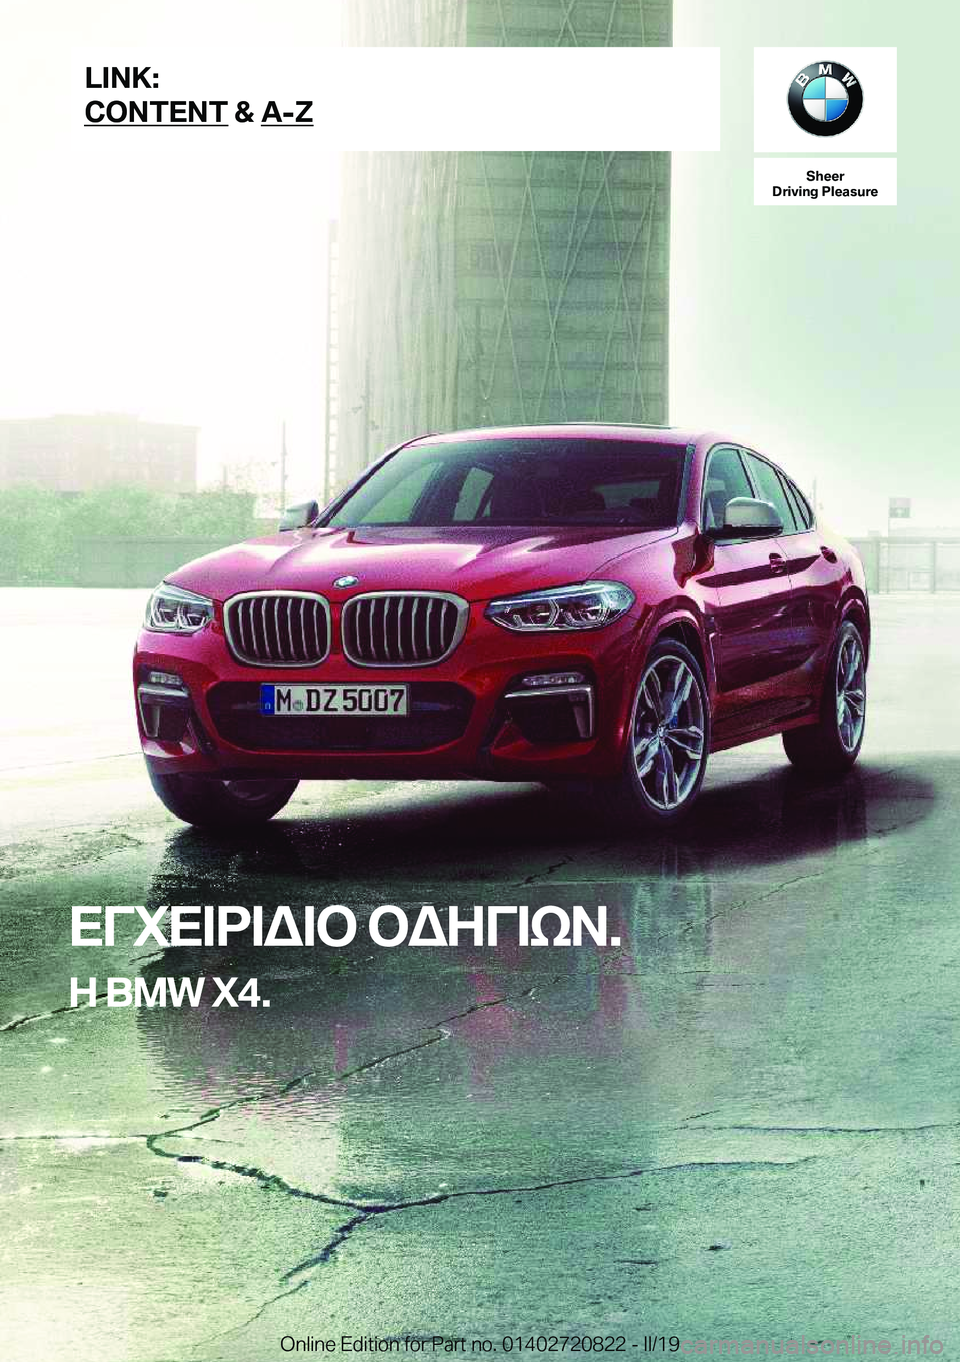 BMW X4 2019  ΟΔΗΓΌΣ ΧΡΉΣΗΣ (in Greek) �S�h�e�e�r
�D�r�i�v�i�n�g��P�l�e�a�s�u�r�e
XViX=d=W=b�bWZV=kA�.
Z��B�M�W��X�4�.�L�I�N�K�:
�C�O�N�T�E�N�T��&��A�-�Z�O�n�l�i�n�e��E�d�i�t�i�o�n��f�o�r��P�a�r�t��n�o�.��0�1�4